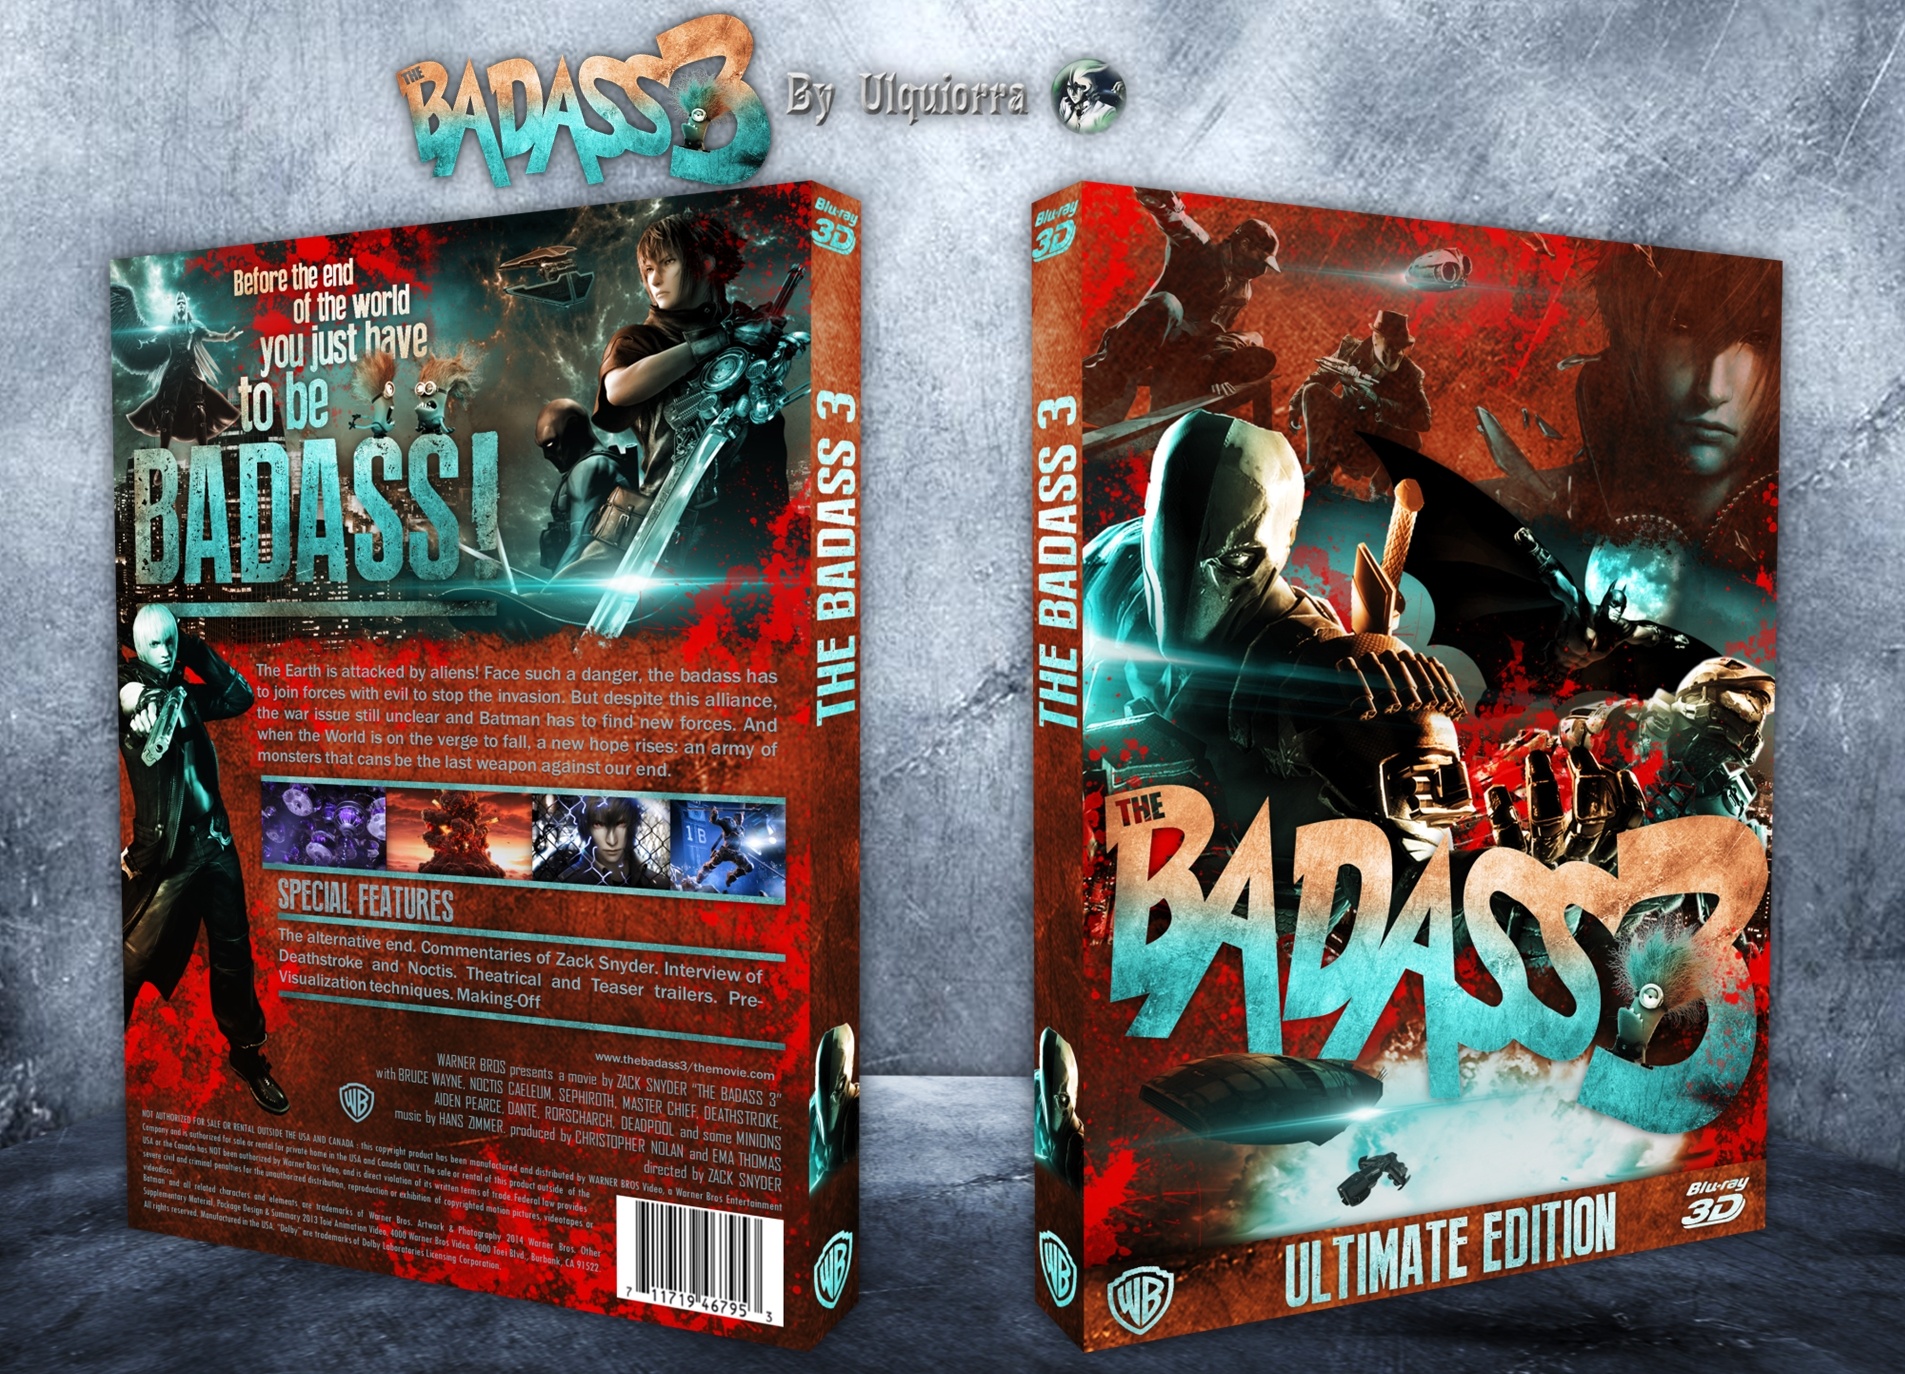 The Badass 3 box cover